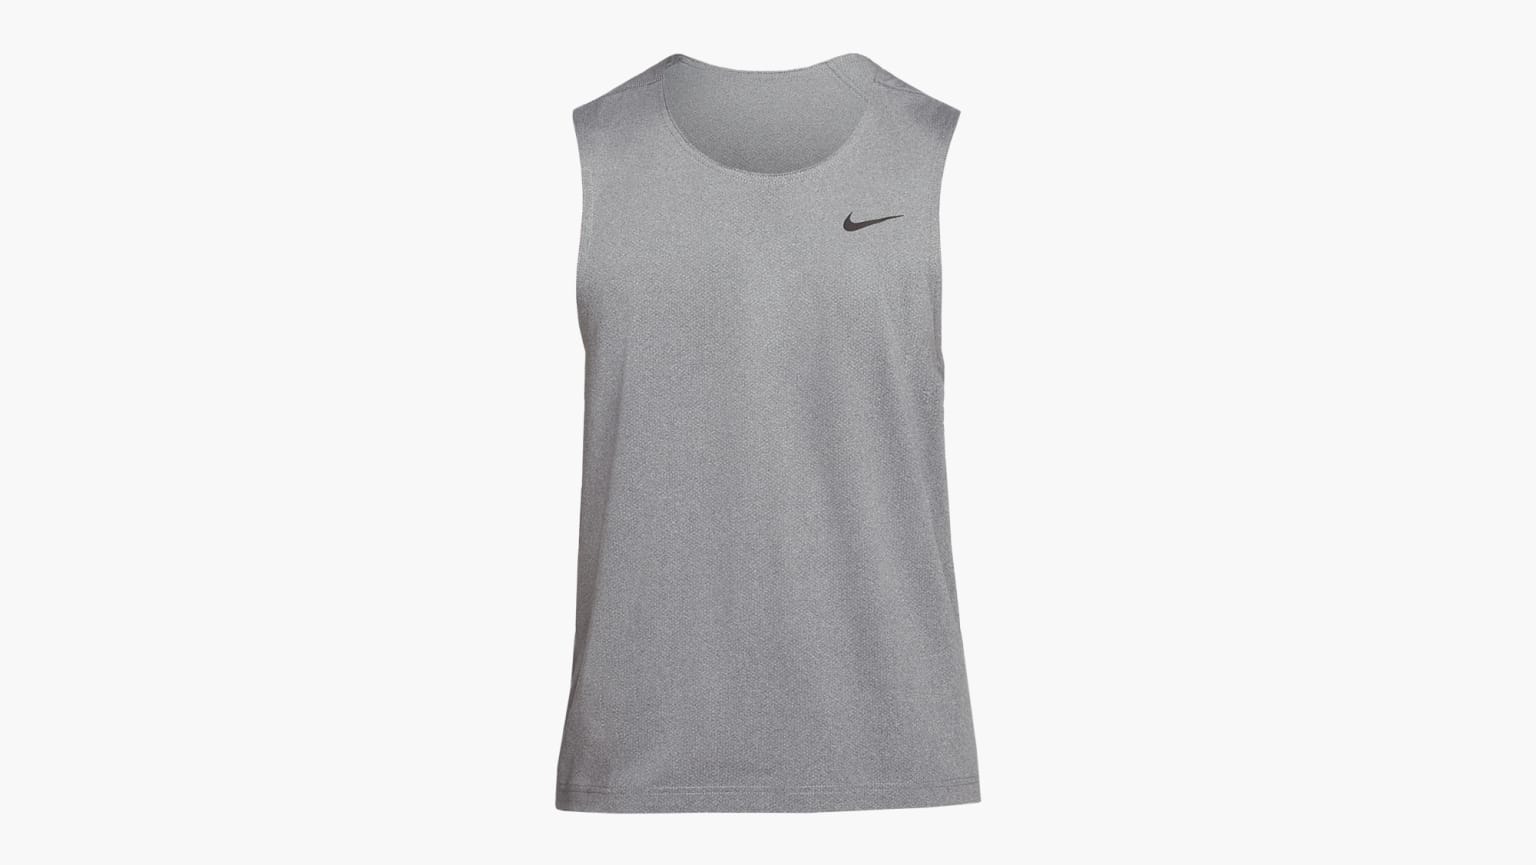 Men's Sleeveless Workout Shirts Quick Dry Athletic Tanks - Heather Black / S